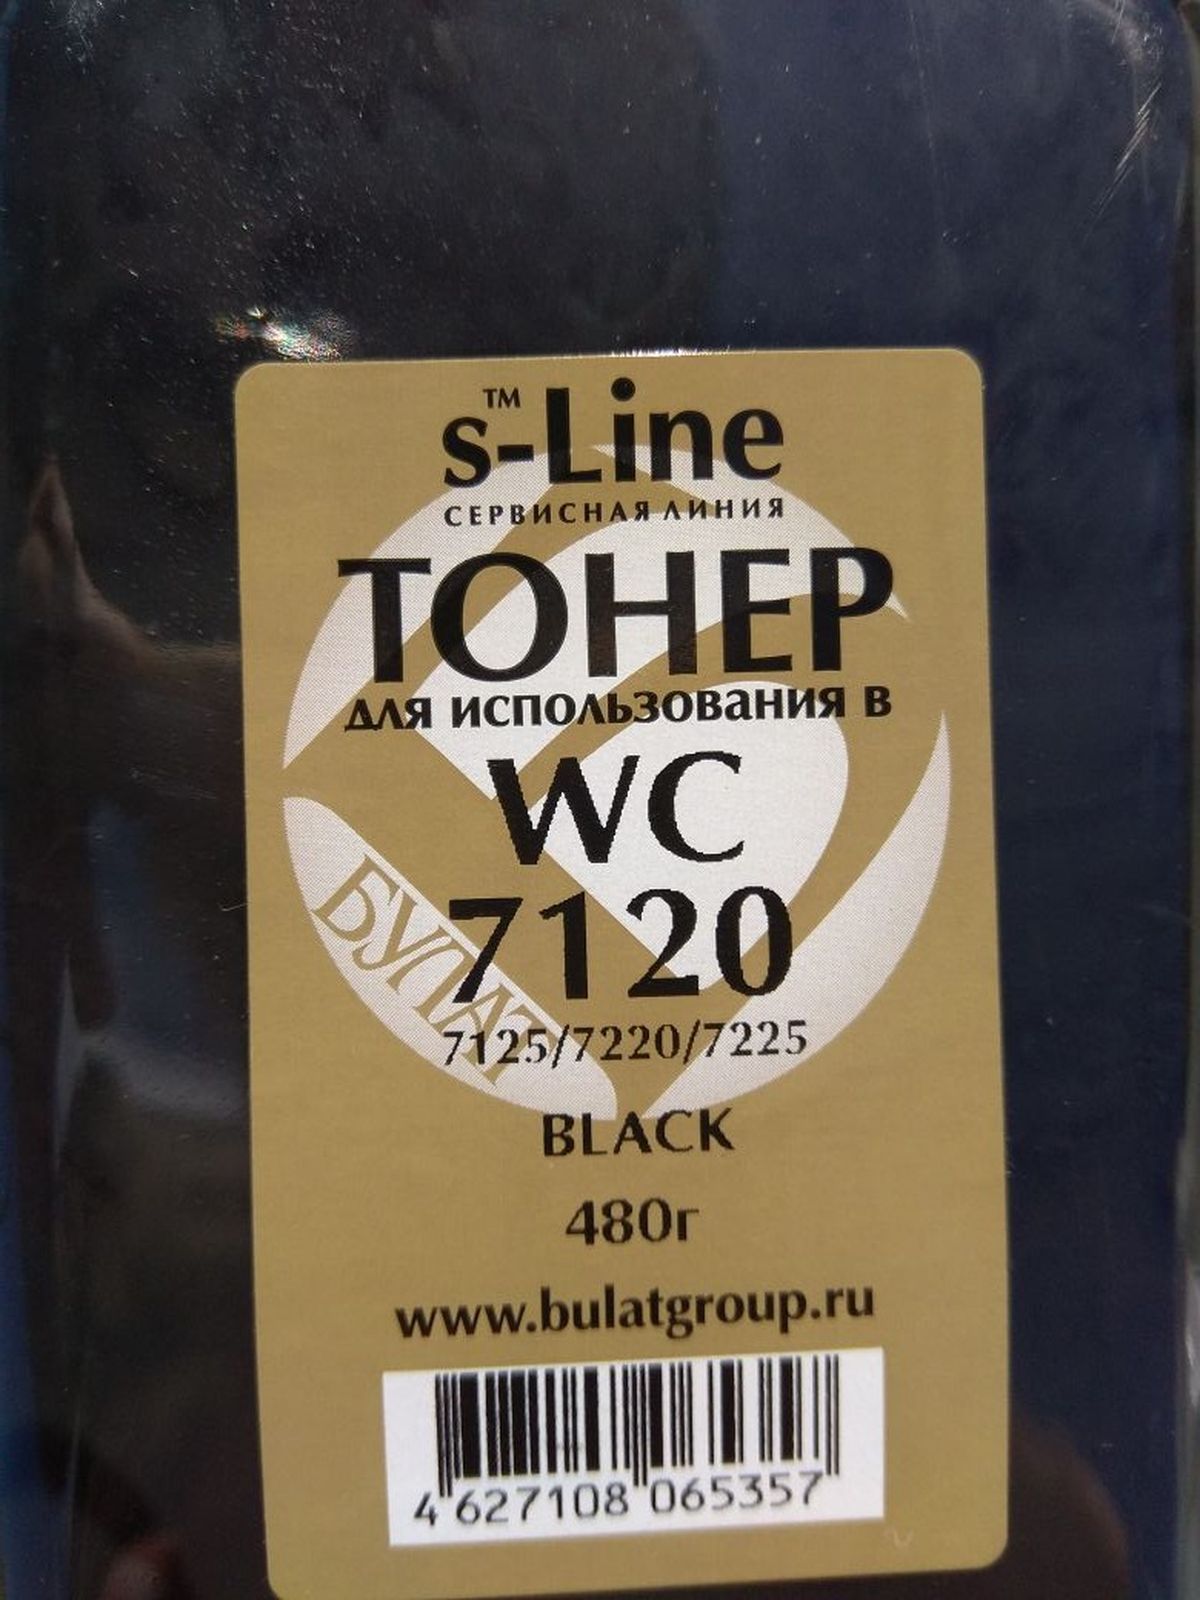 Тонер Xerox WorkCentre 7120/7220 банка 480г Black БУЛАТ s-Line